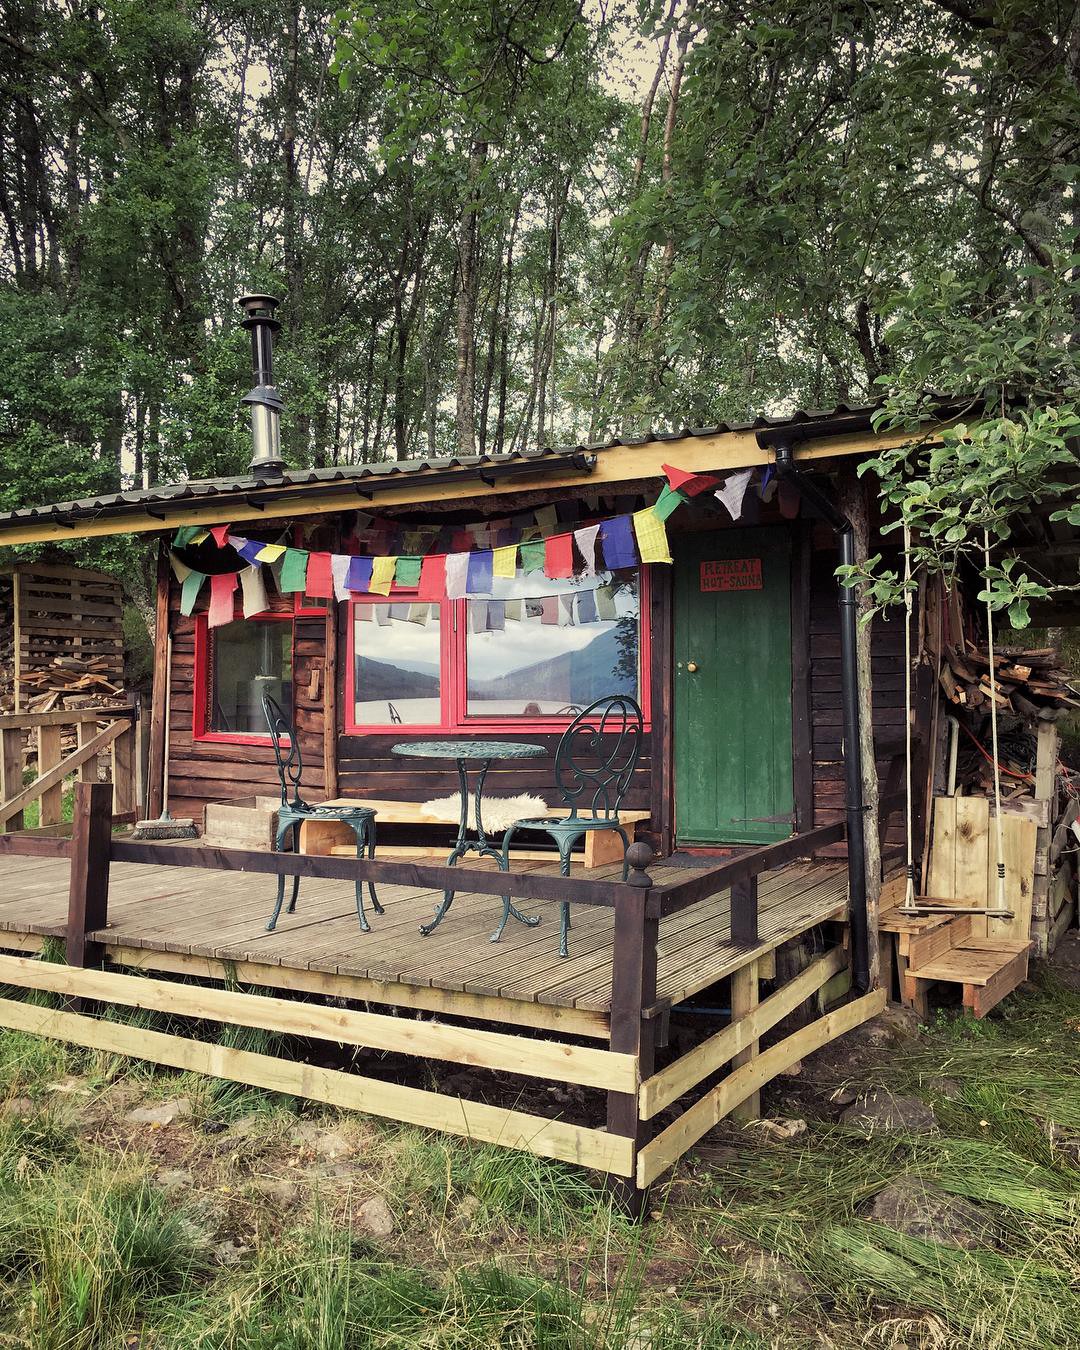 The Retreat Hut